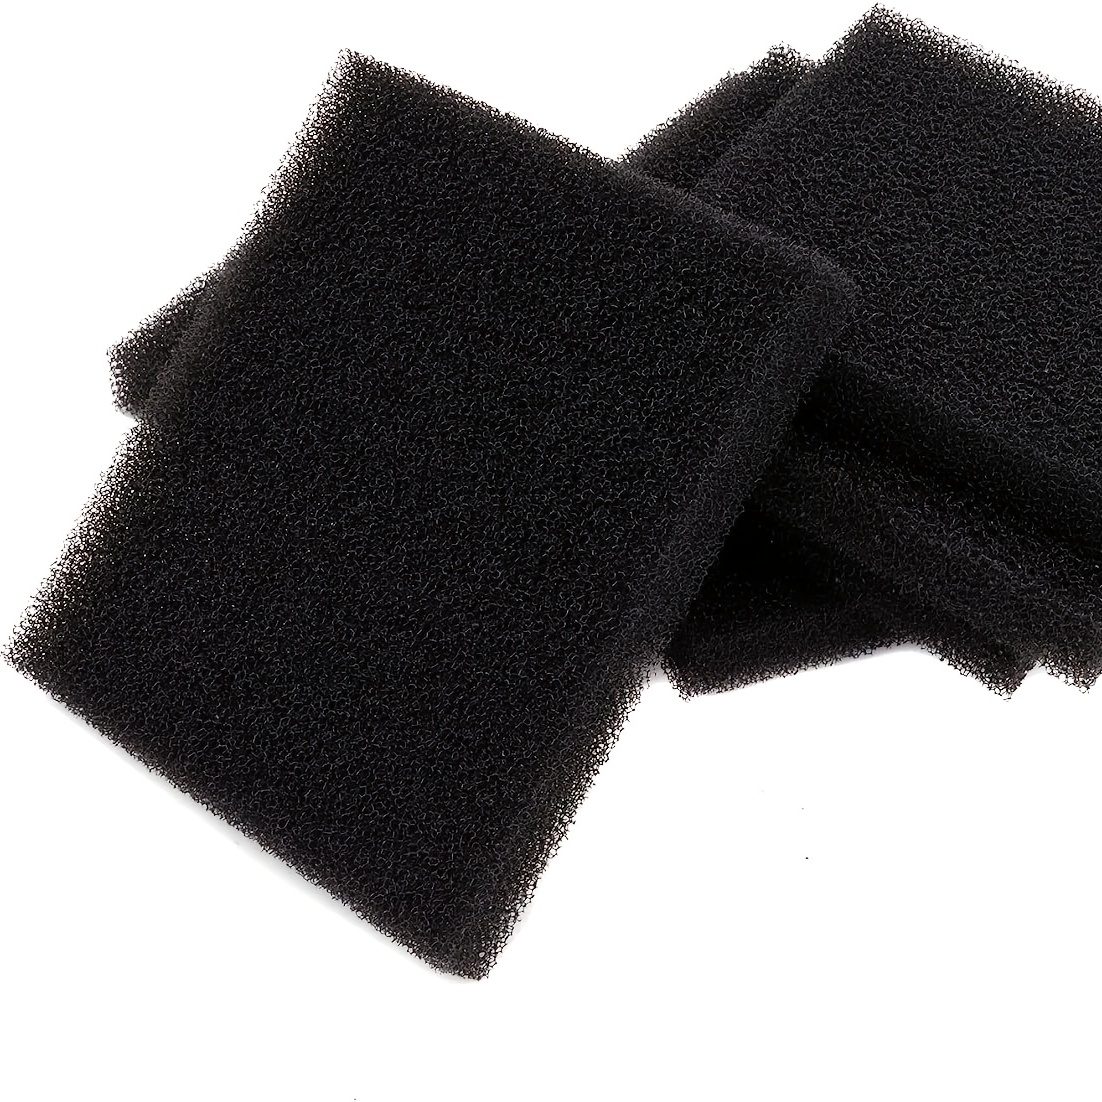 YEE Biochemical High Density Cotton Filter Media Sponge 250g